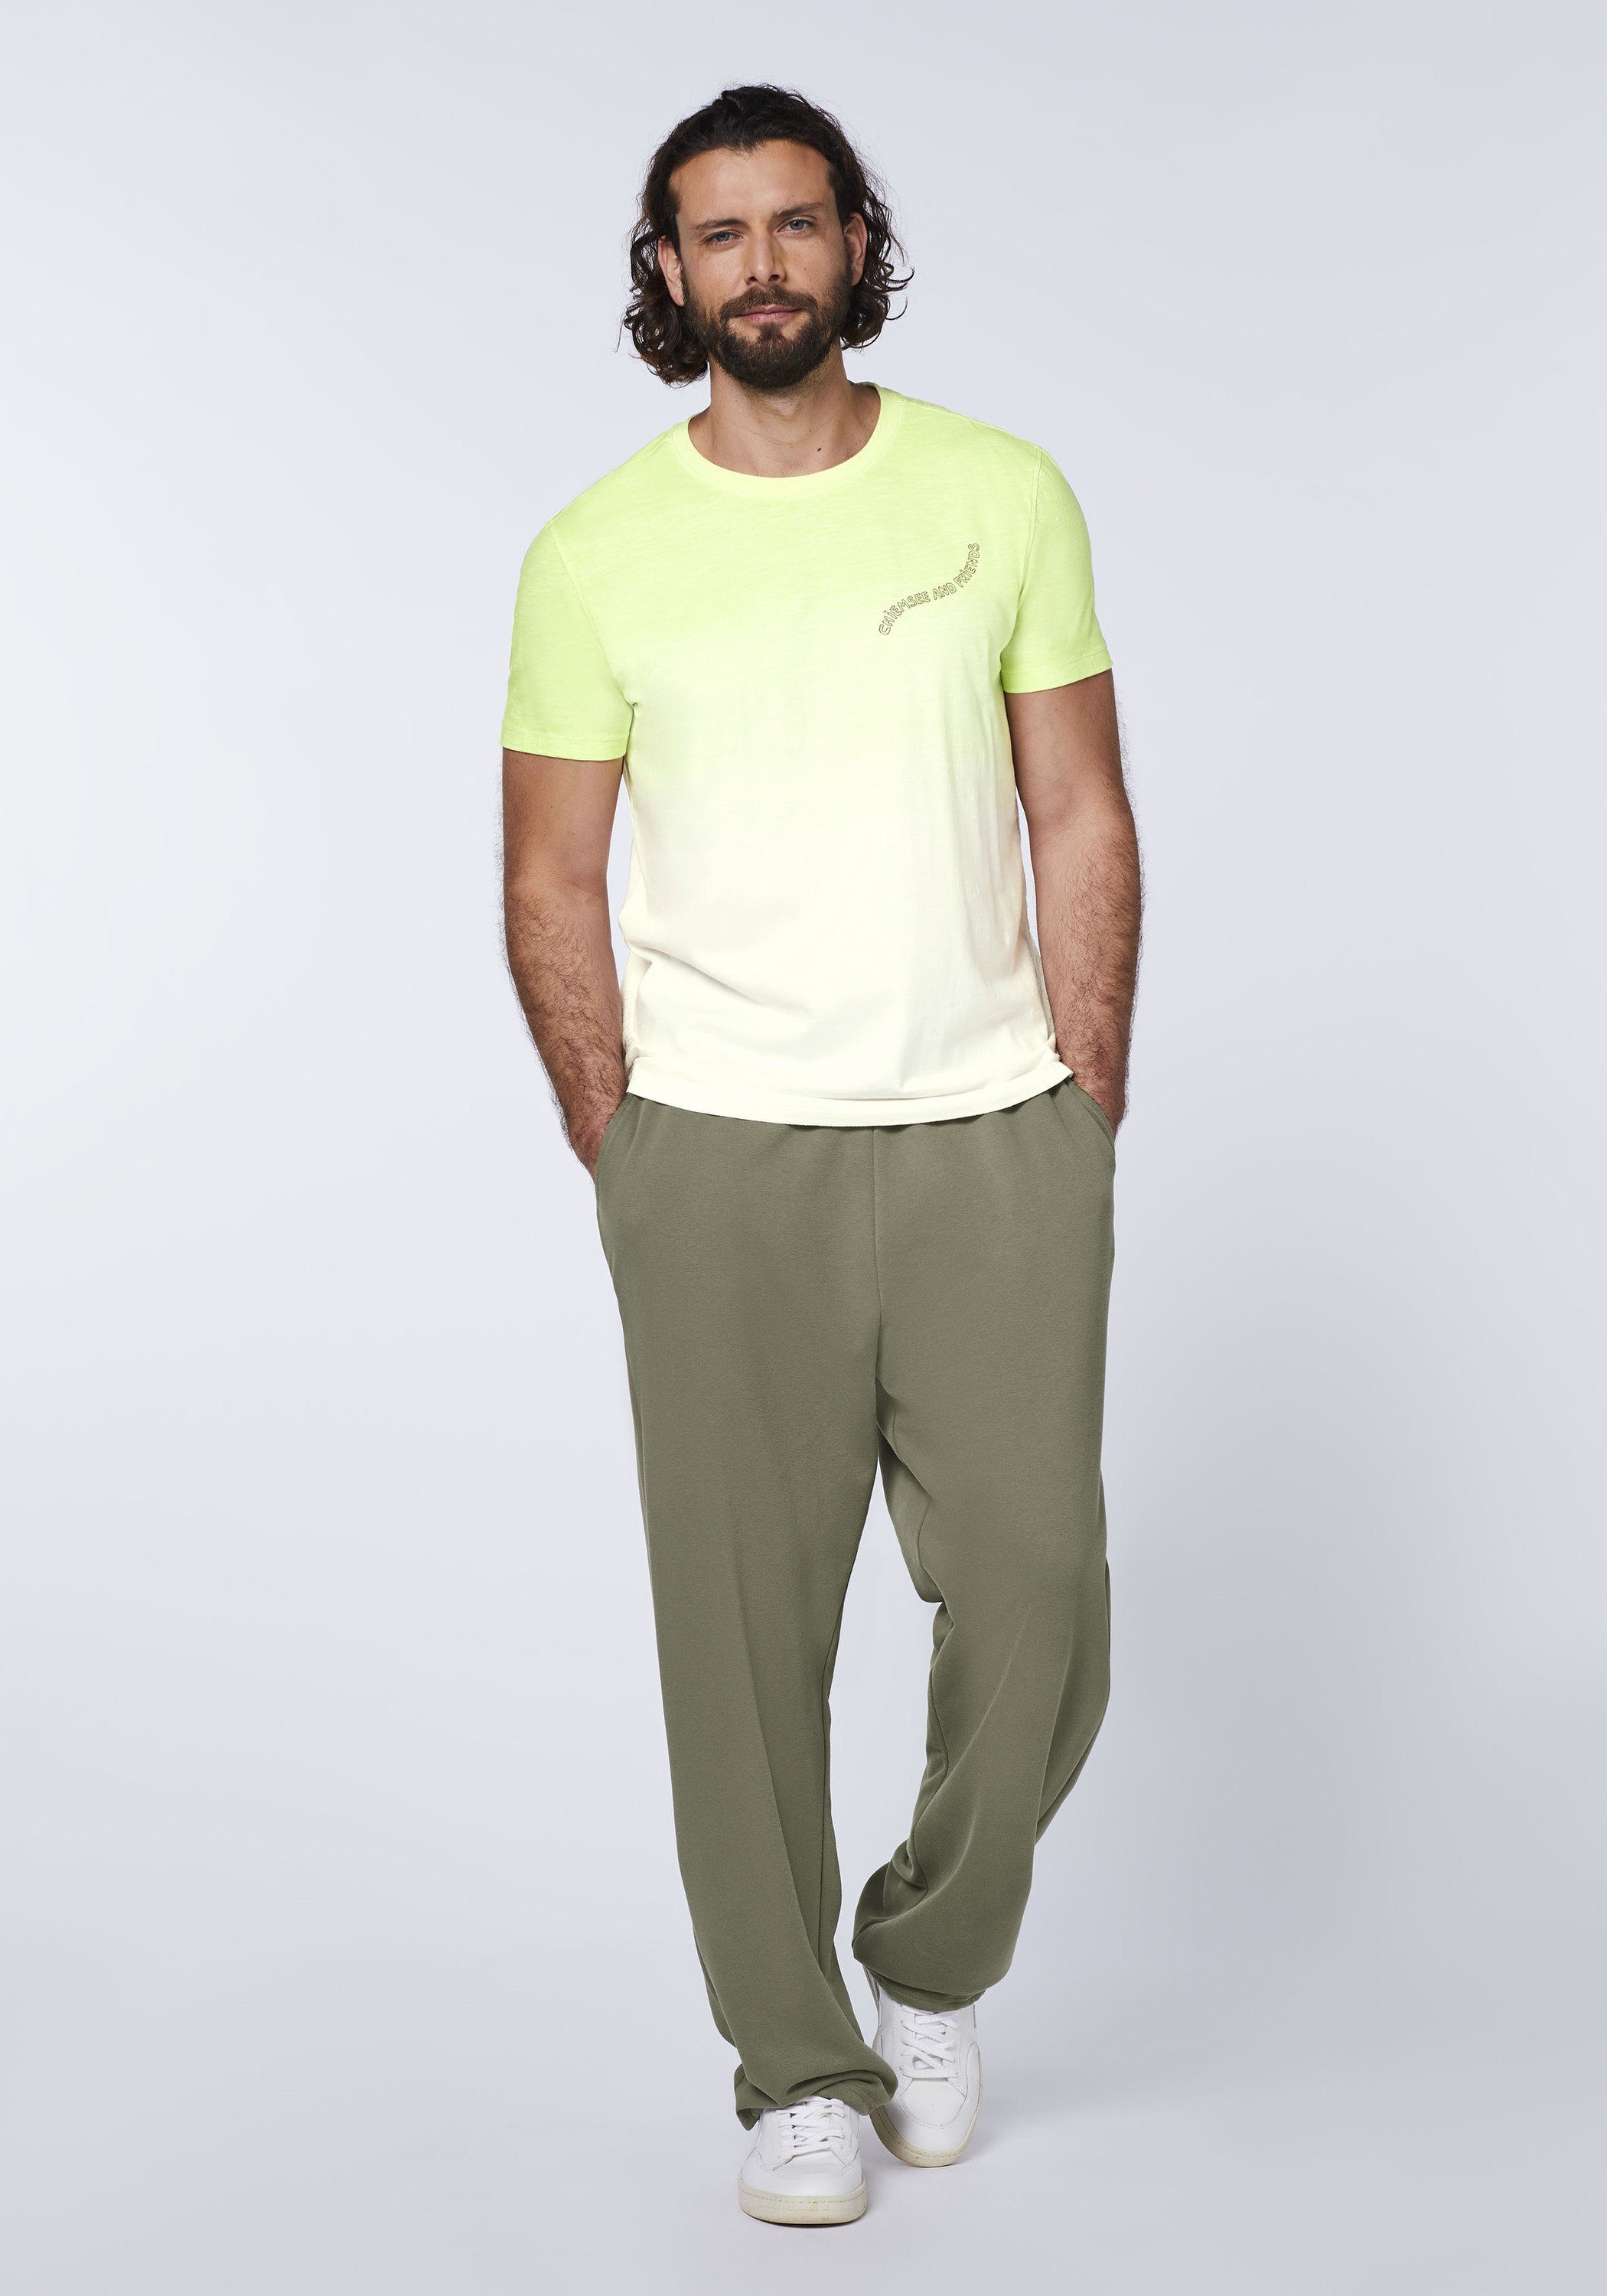 Print-Shirt Slub-Yarn-Textur Chiemsee 6268 1 Green/Dark Green mit im Farbverlauf Light T-Shirt